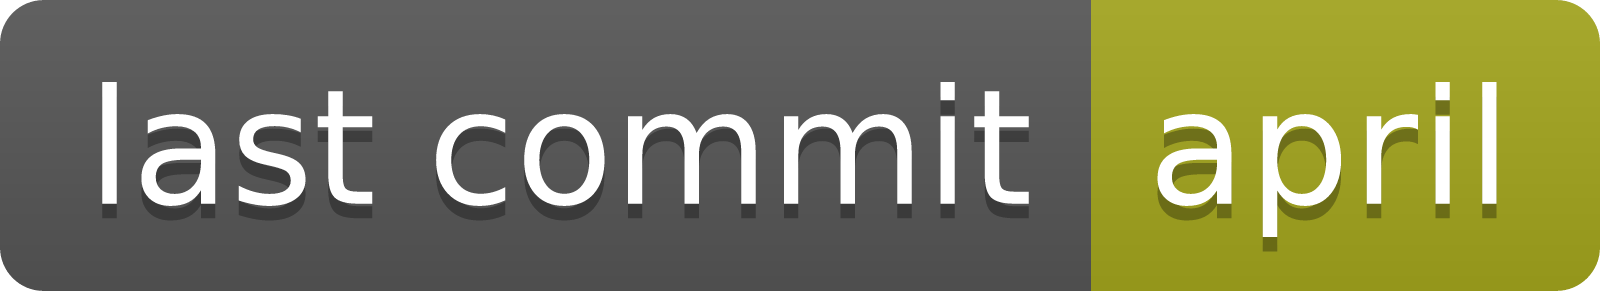 github/last-commit